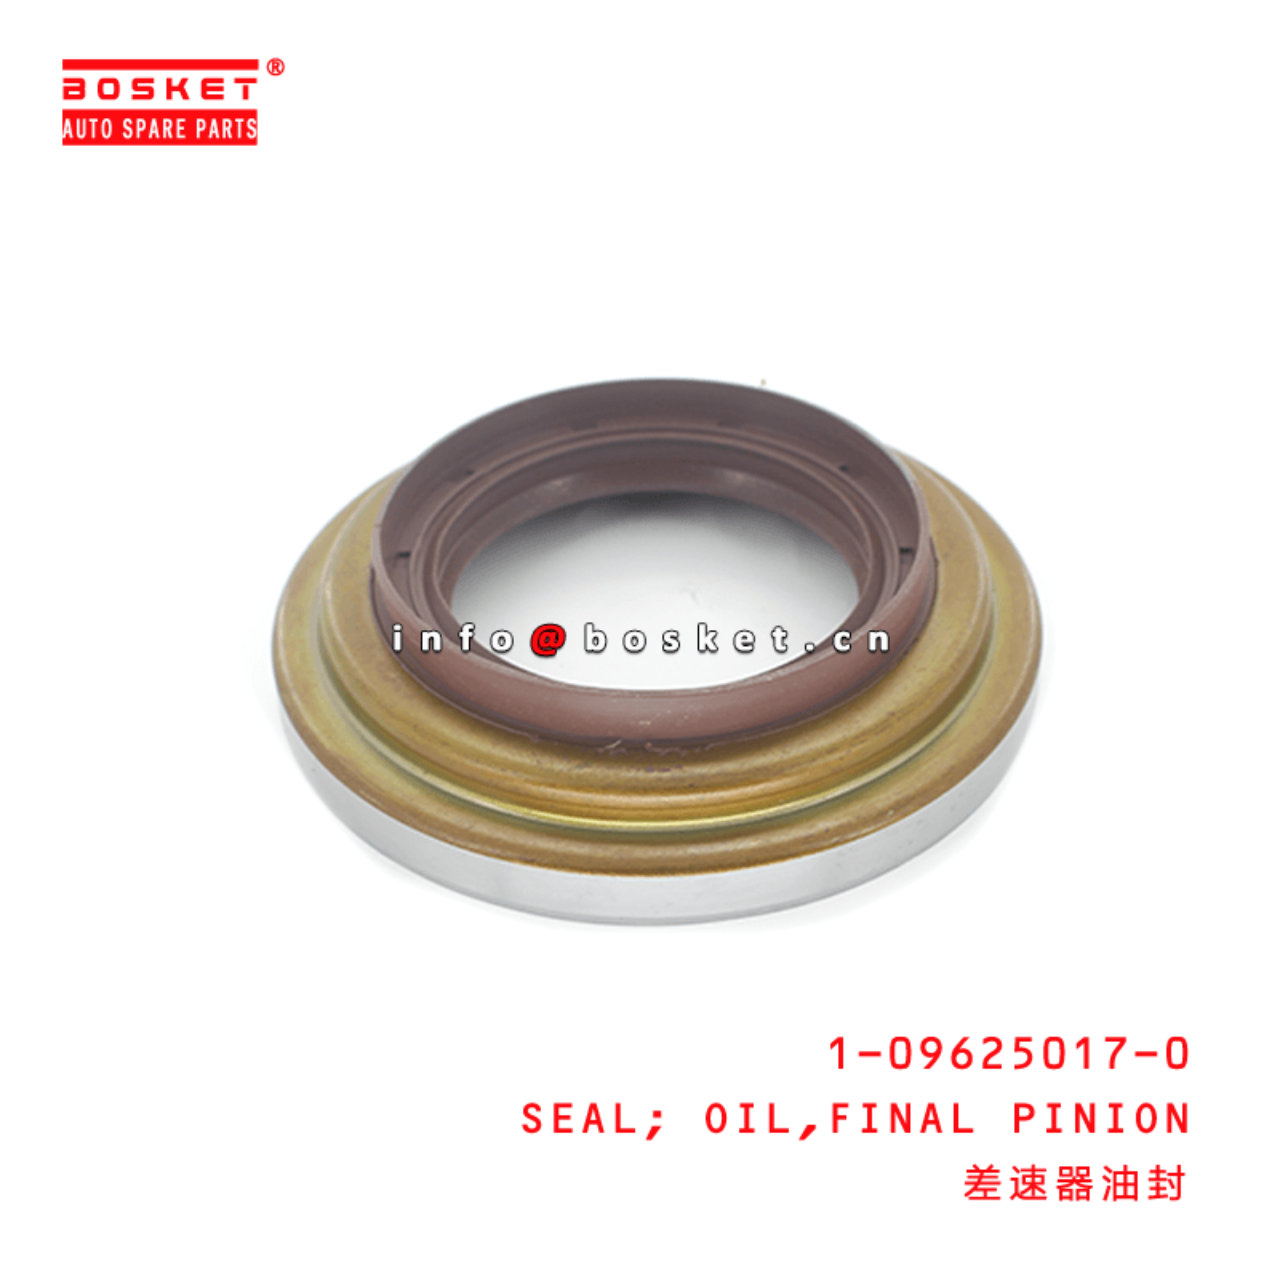  1-09625017-0 Final Pinion Oil Seal 1096250170 Suitable for ISUZU FTR11 6BD1